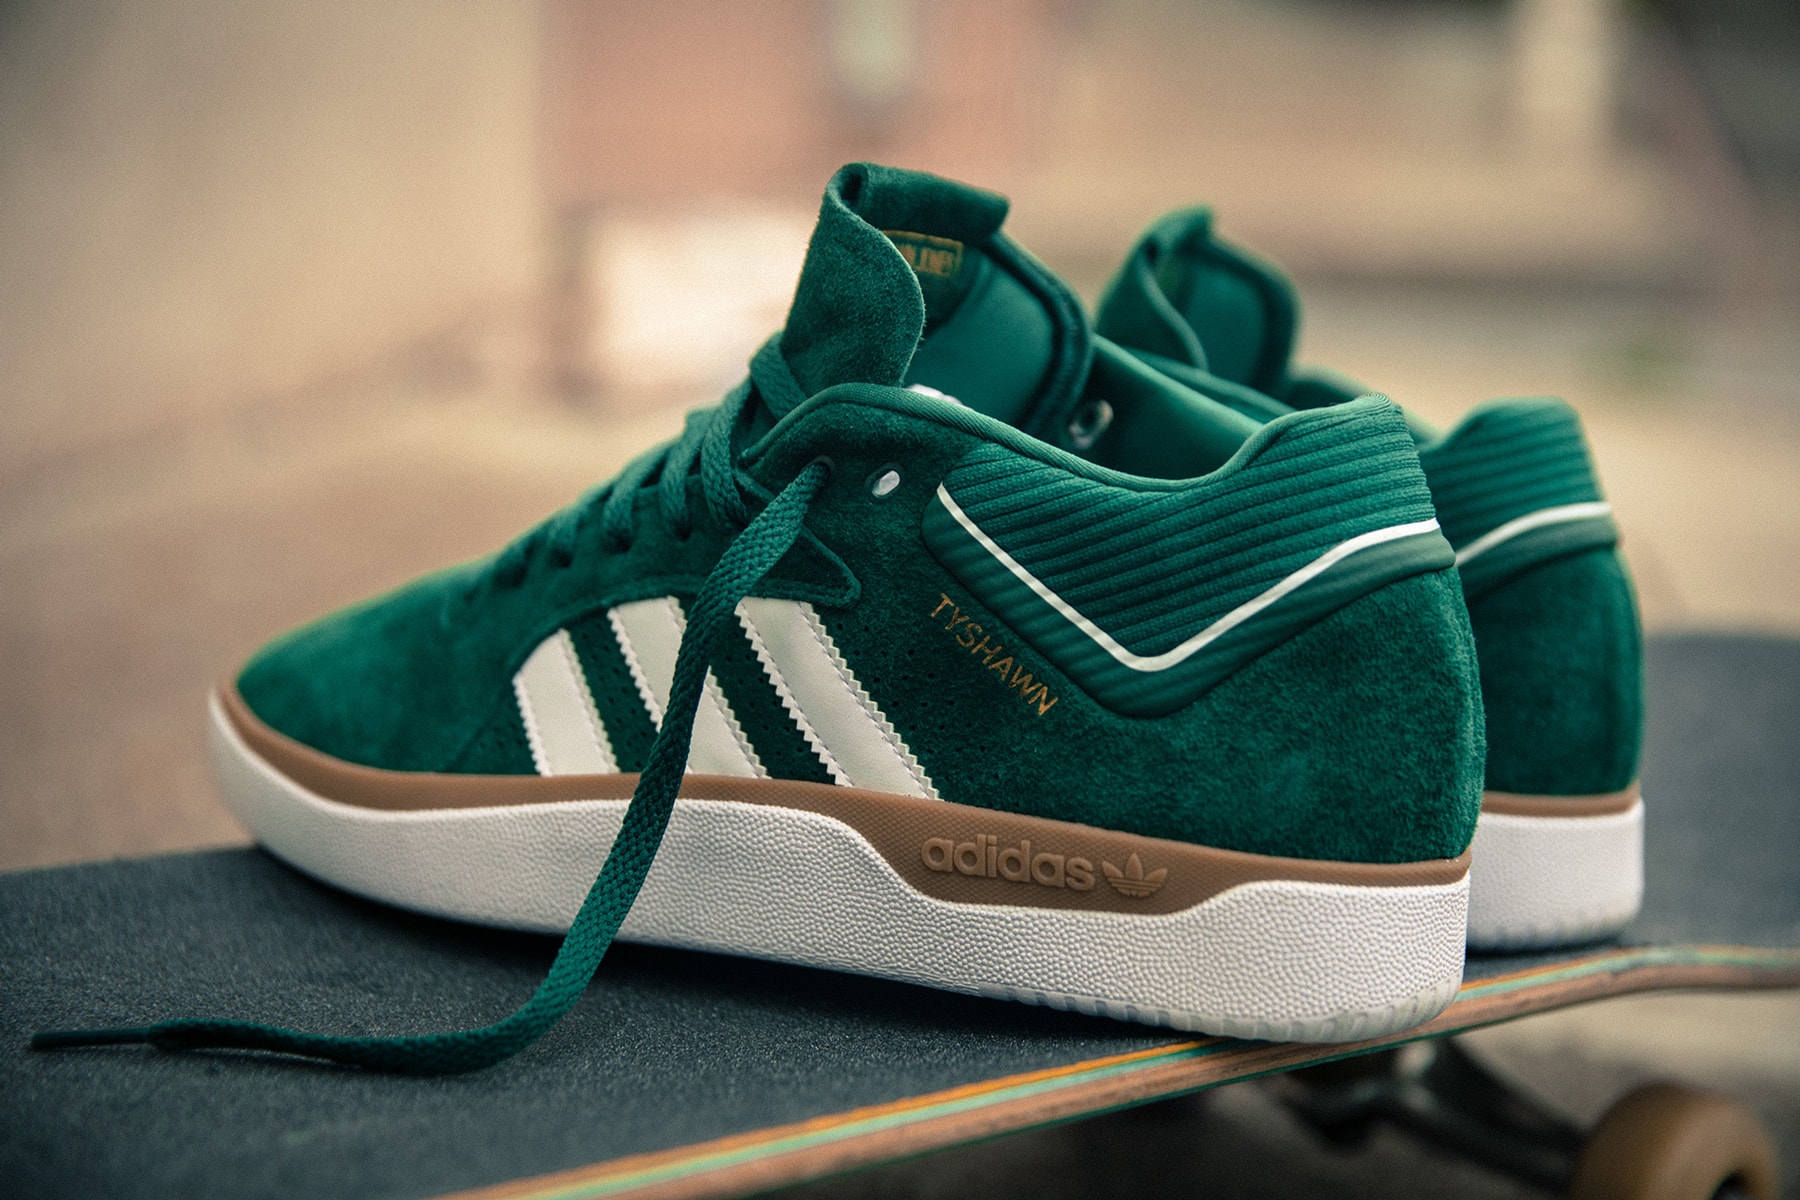 adidas Jones "Green/White" Sneaker Release |